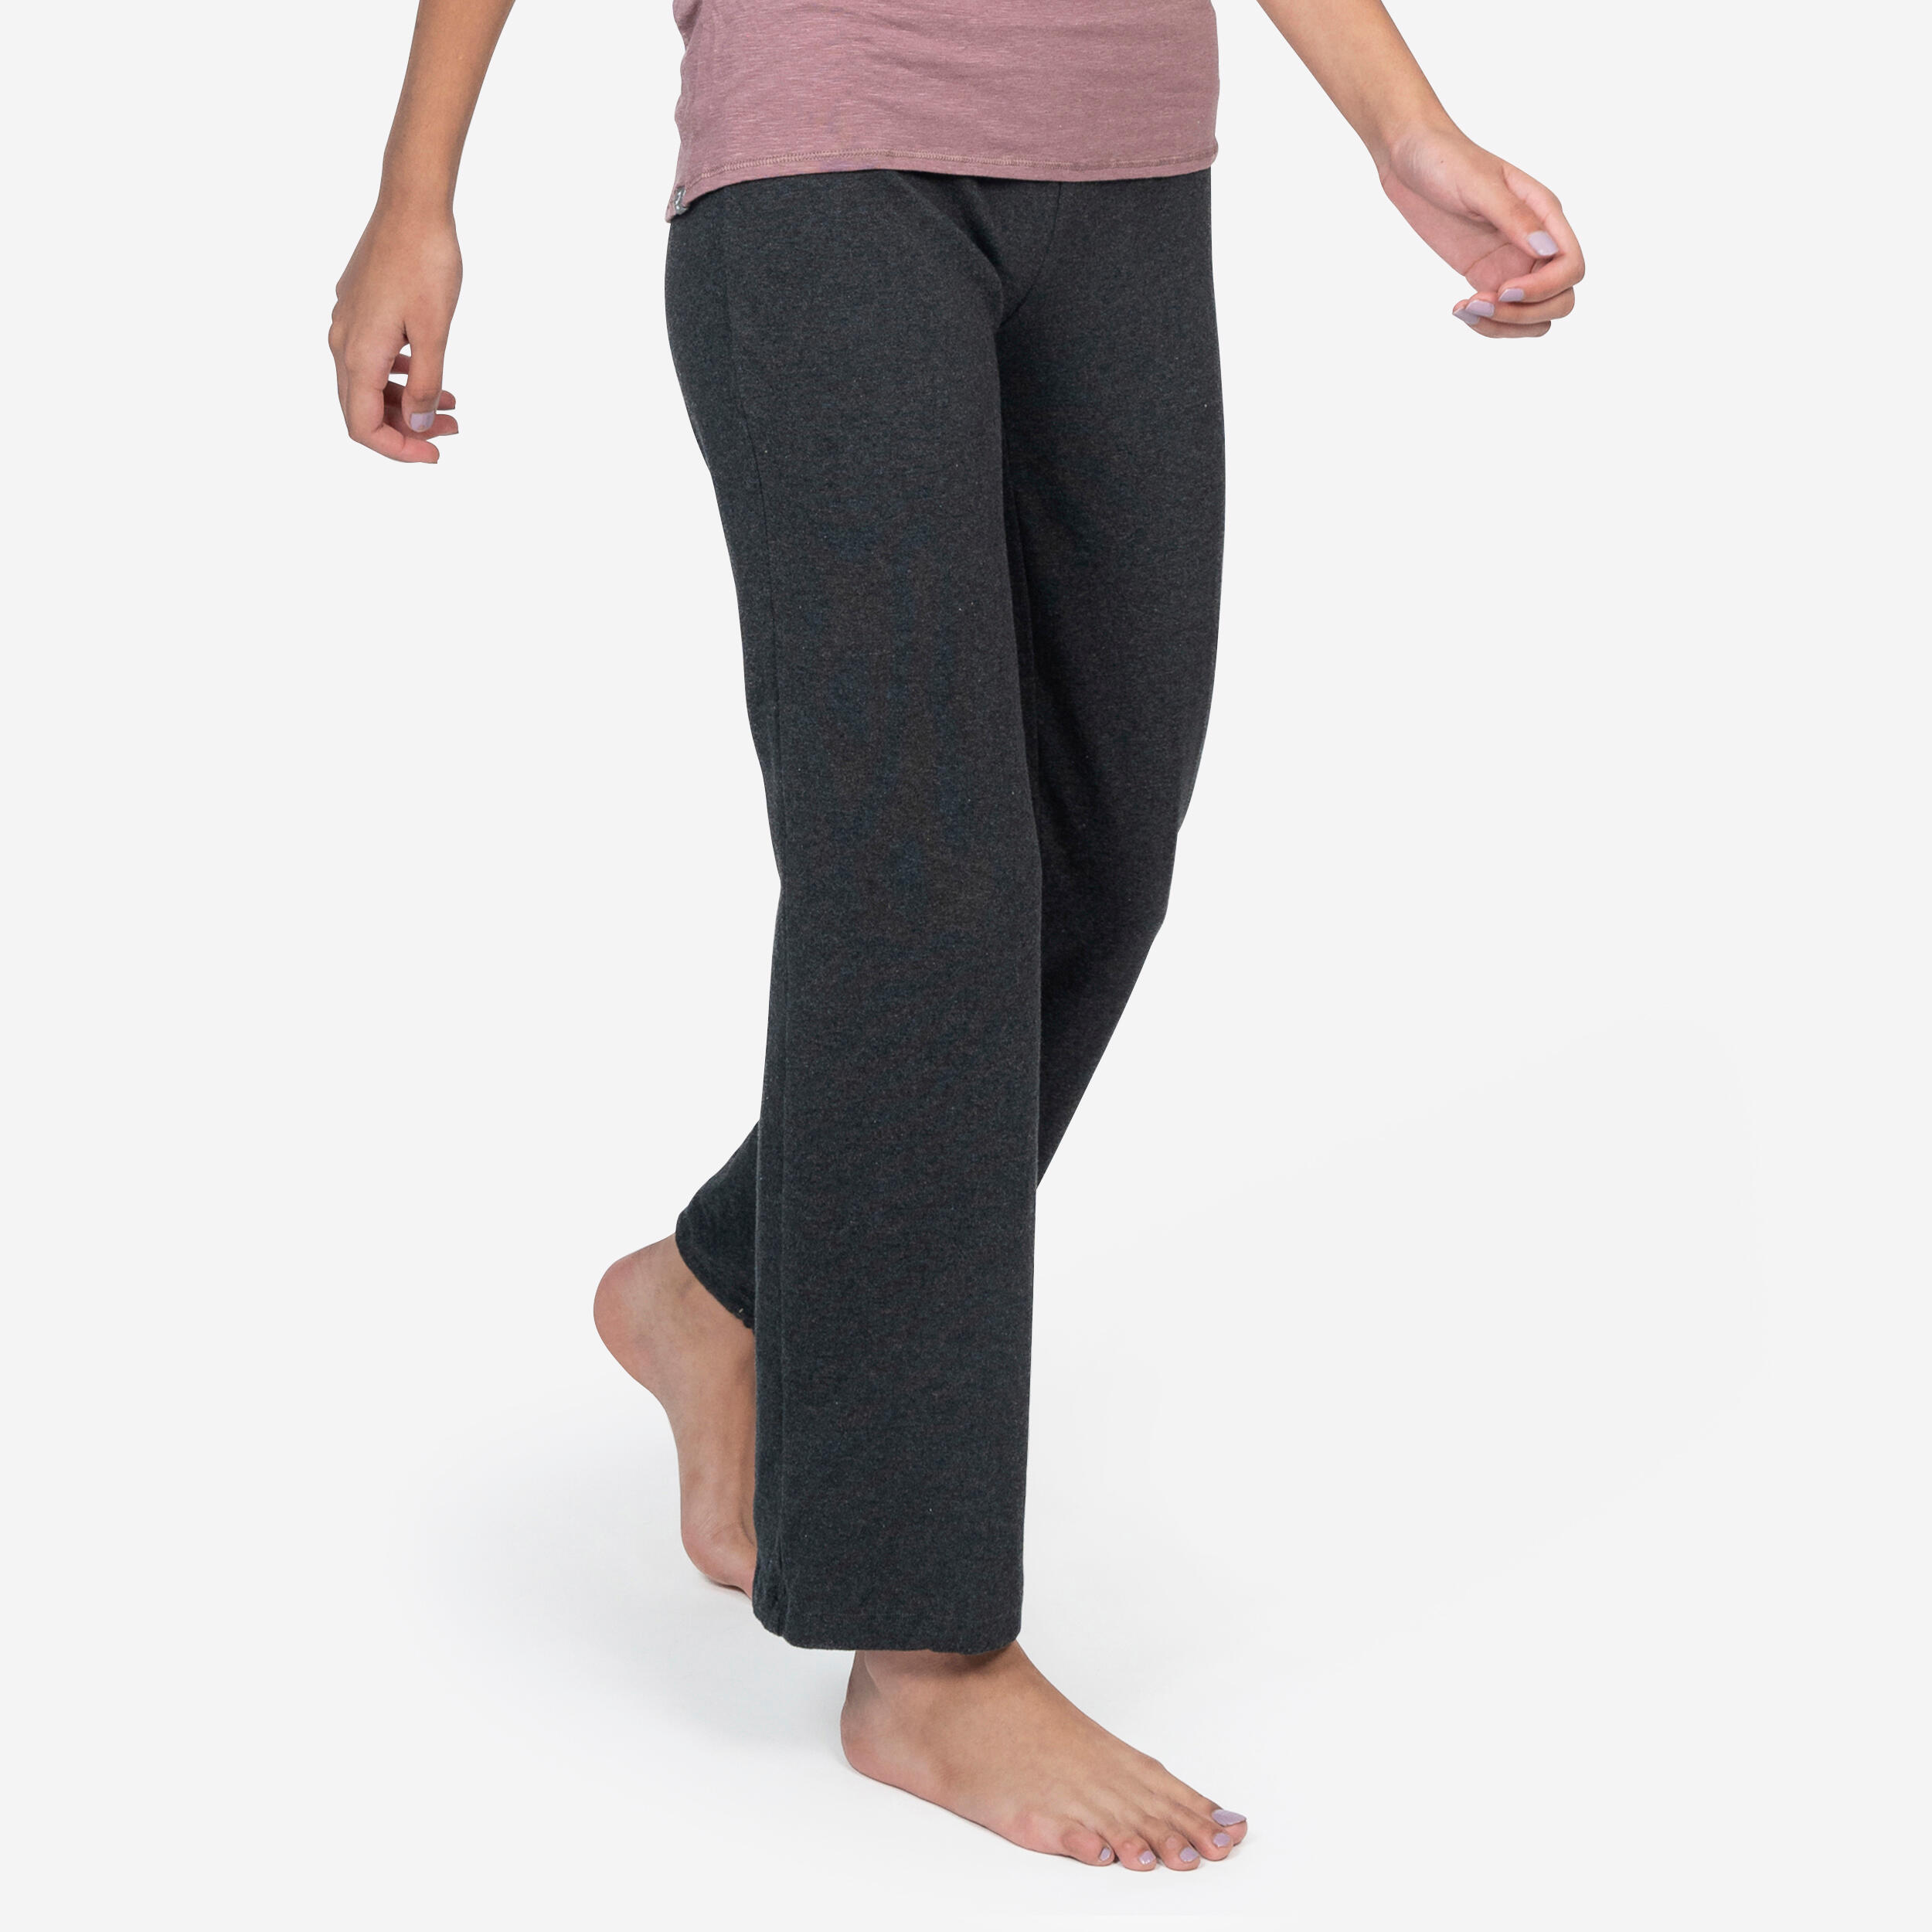 Buy AEKO Women's Yoga Pants Soft Cotton Blend High Waist Workout Leggings  (S/M USA 2-6, LHW010N-NAV) at Amazon.in